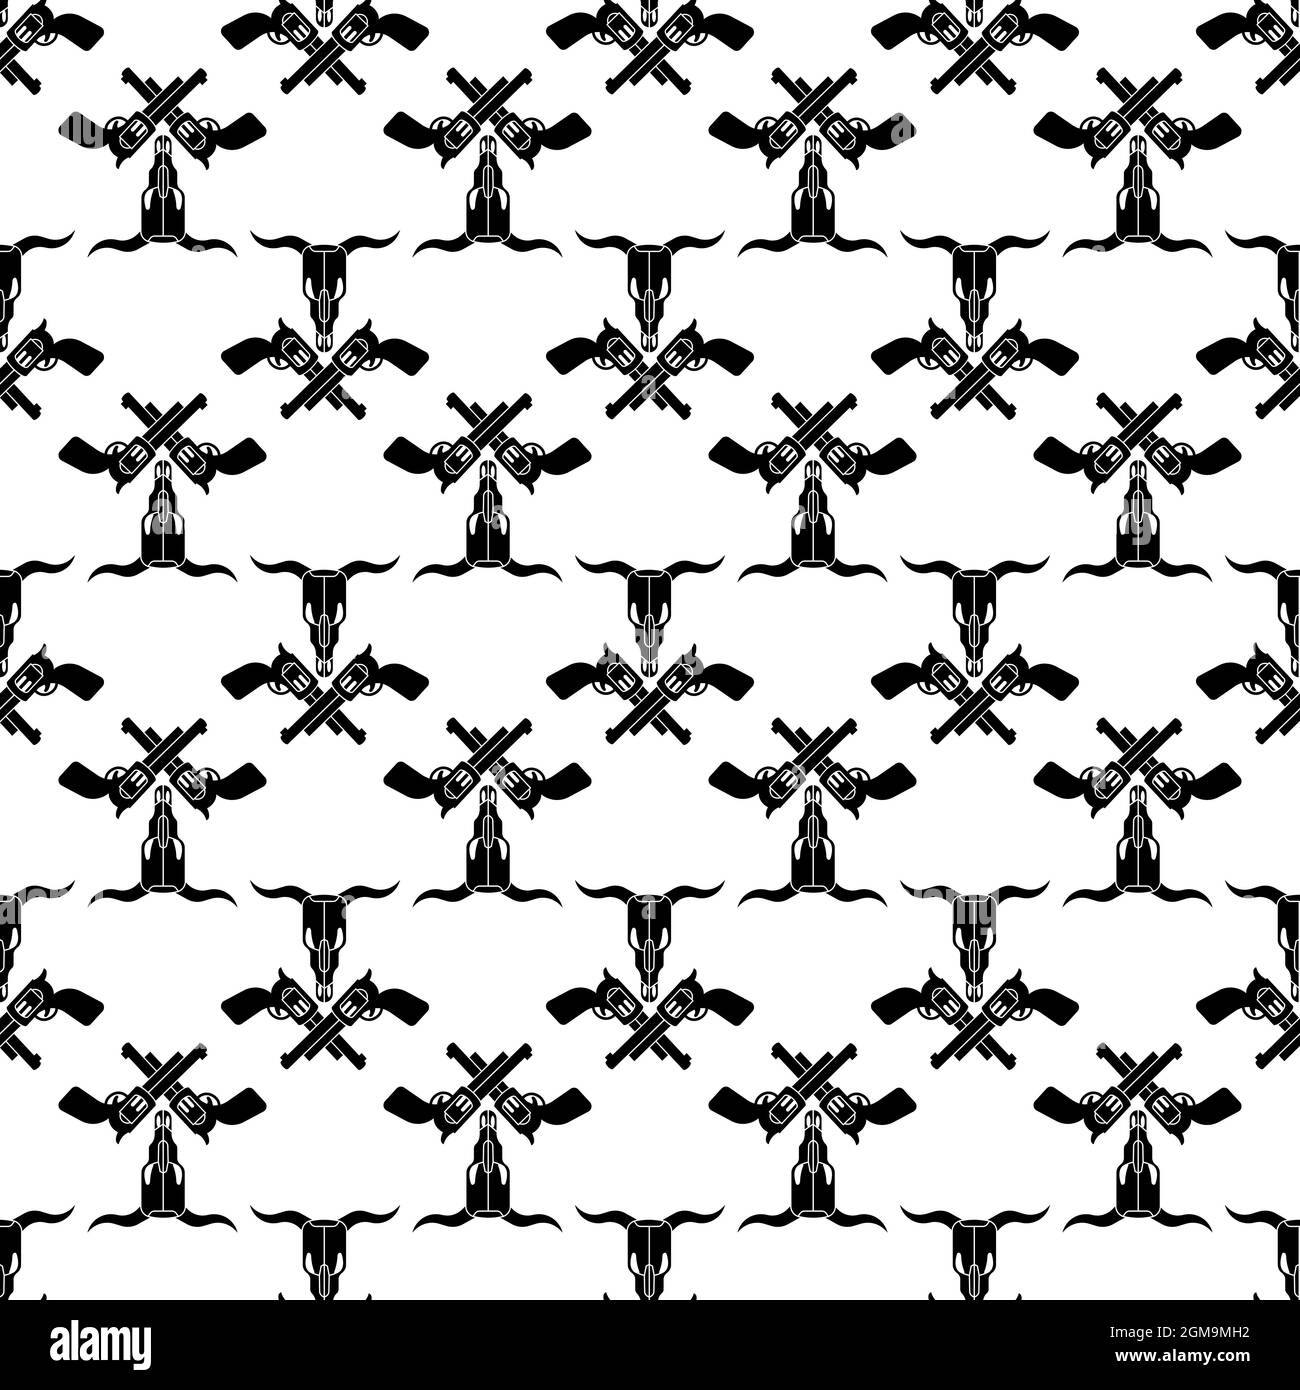 Cow skull cross revolver pattern seamless background texture repeat wallpaper geometric vector Stock Vector